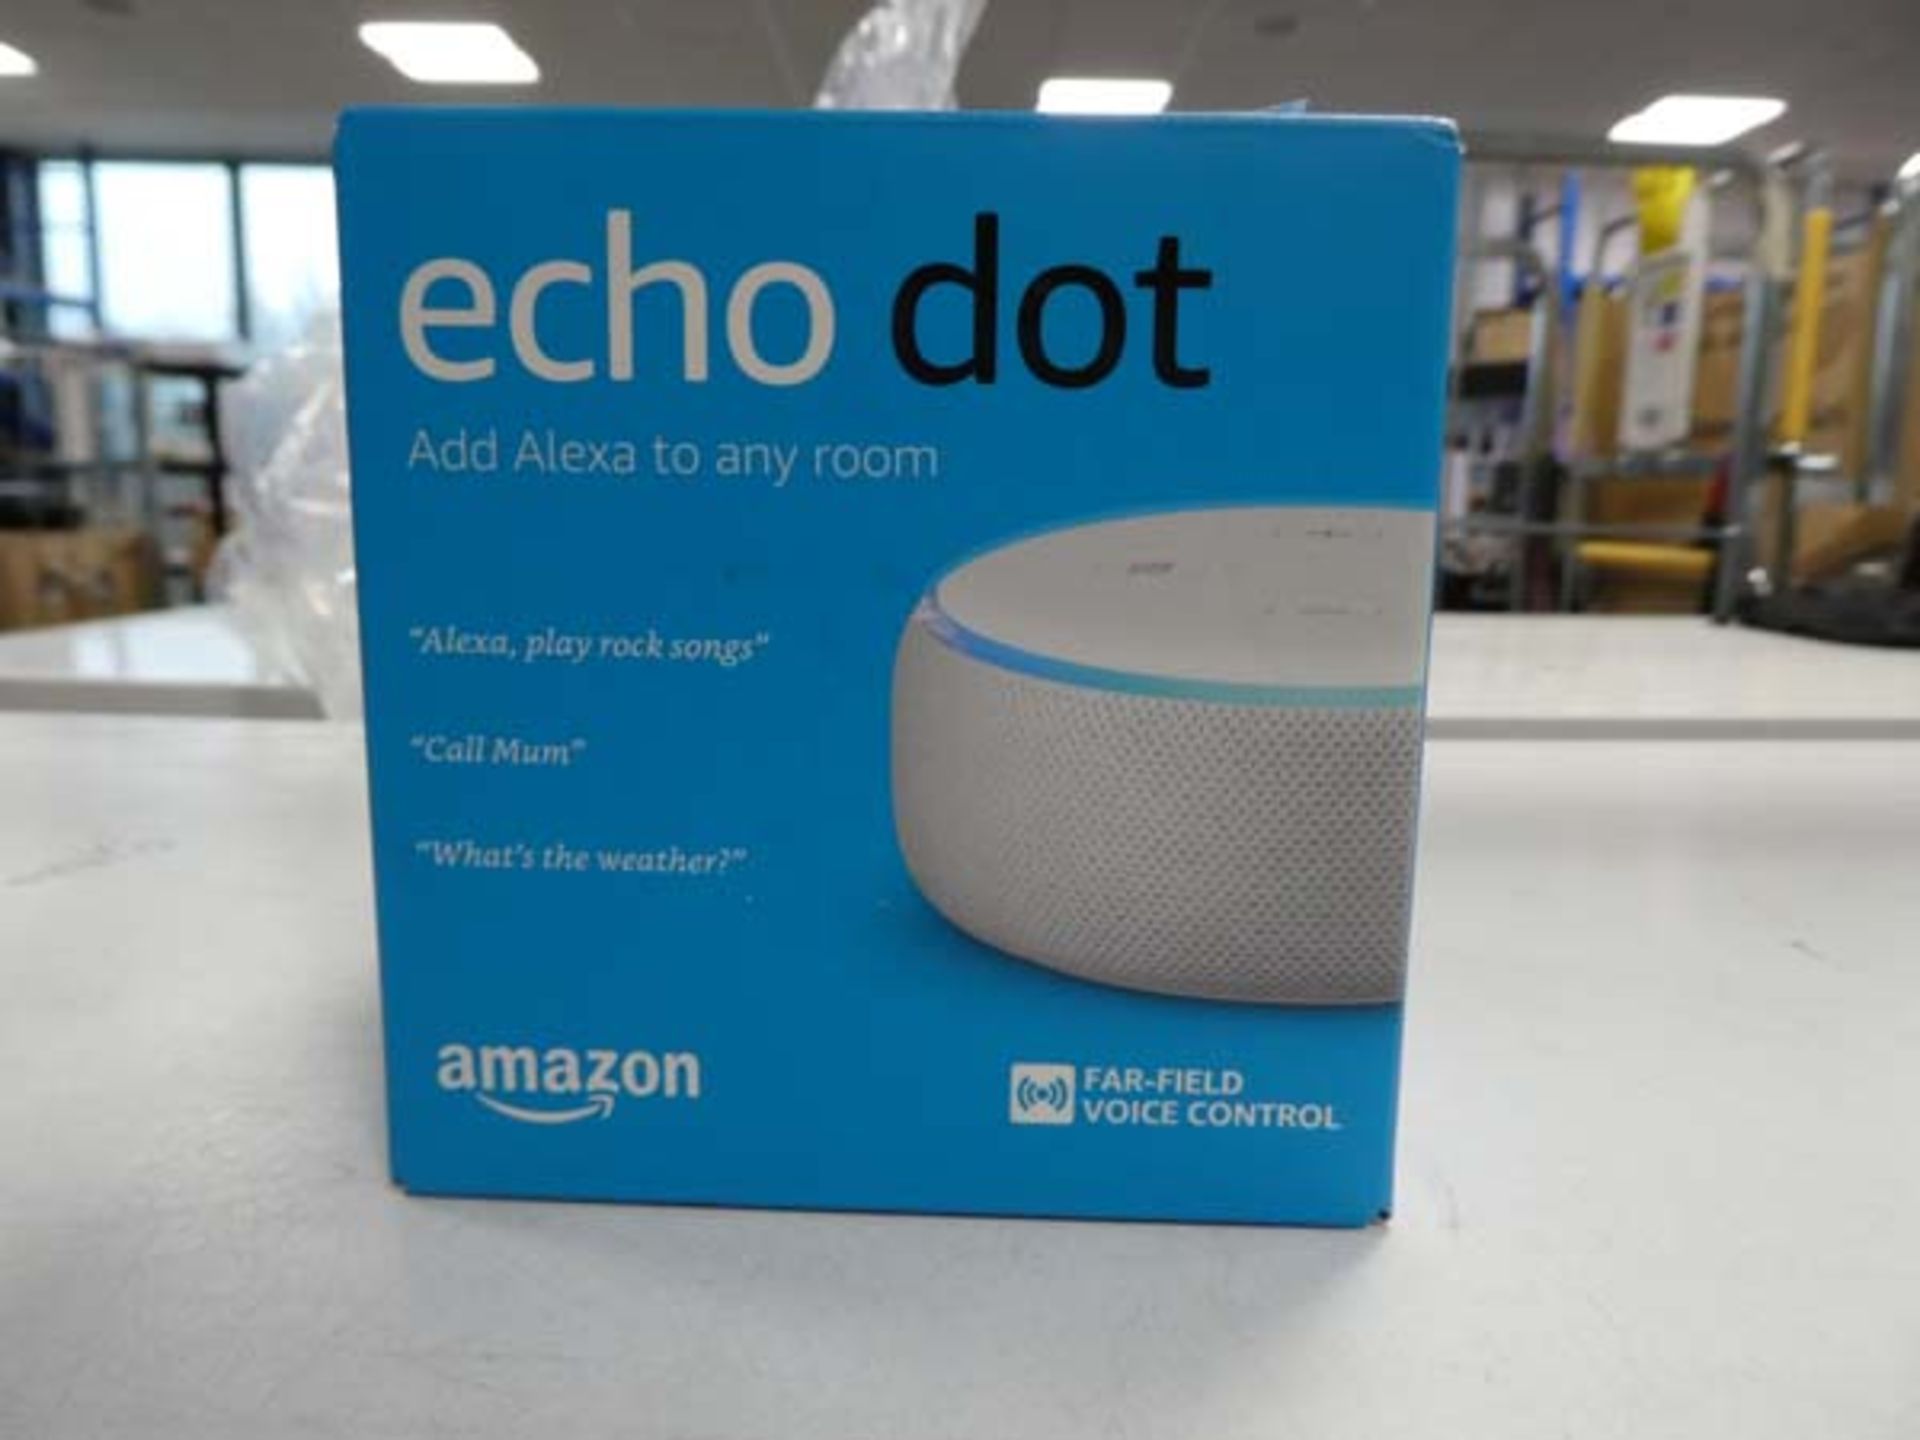 Amazon Echo Dot speaker with box